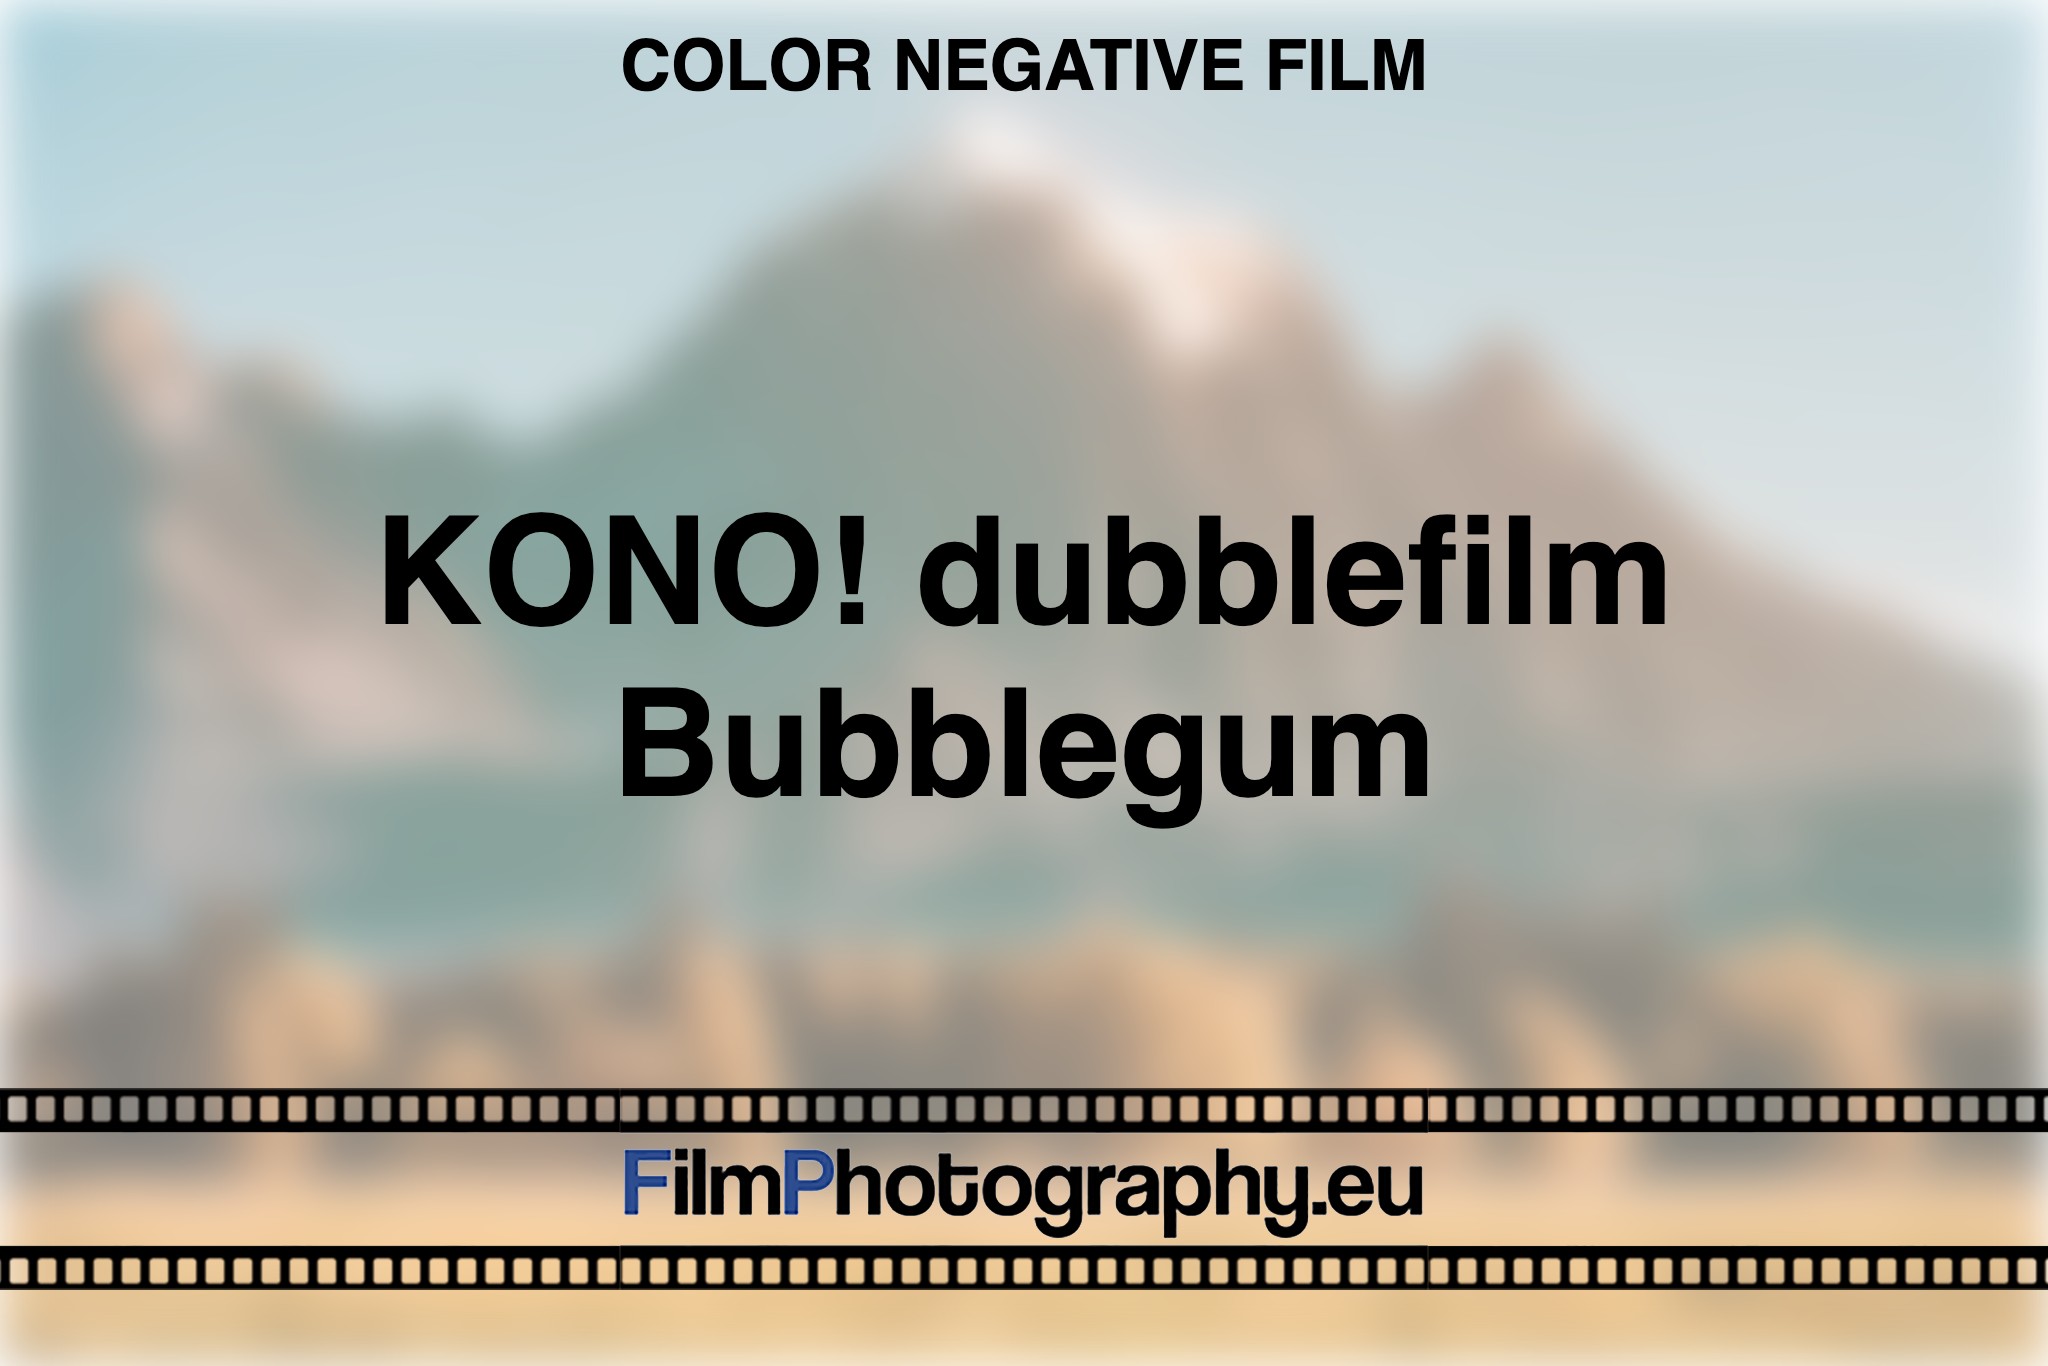 kono-dubblefilm-bubblegum-color-negative-film-bnv